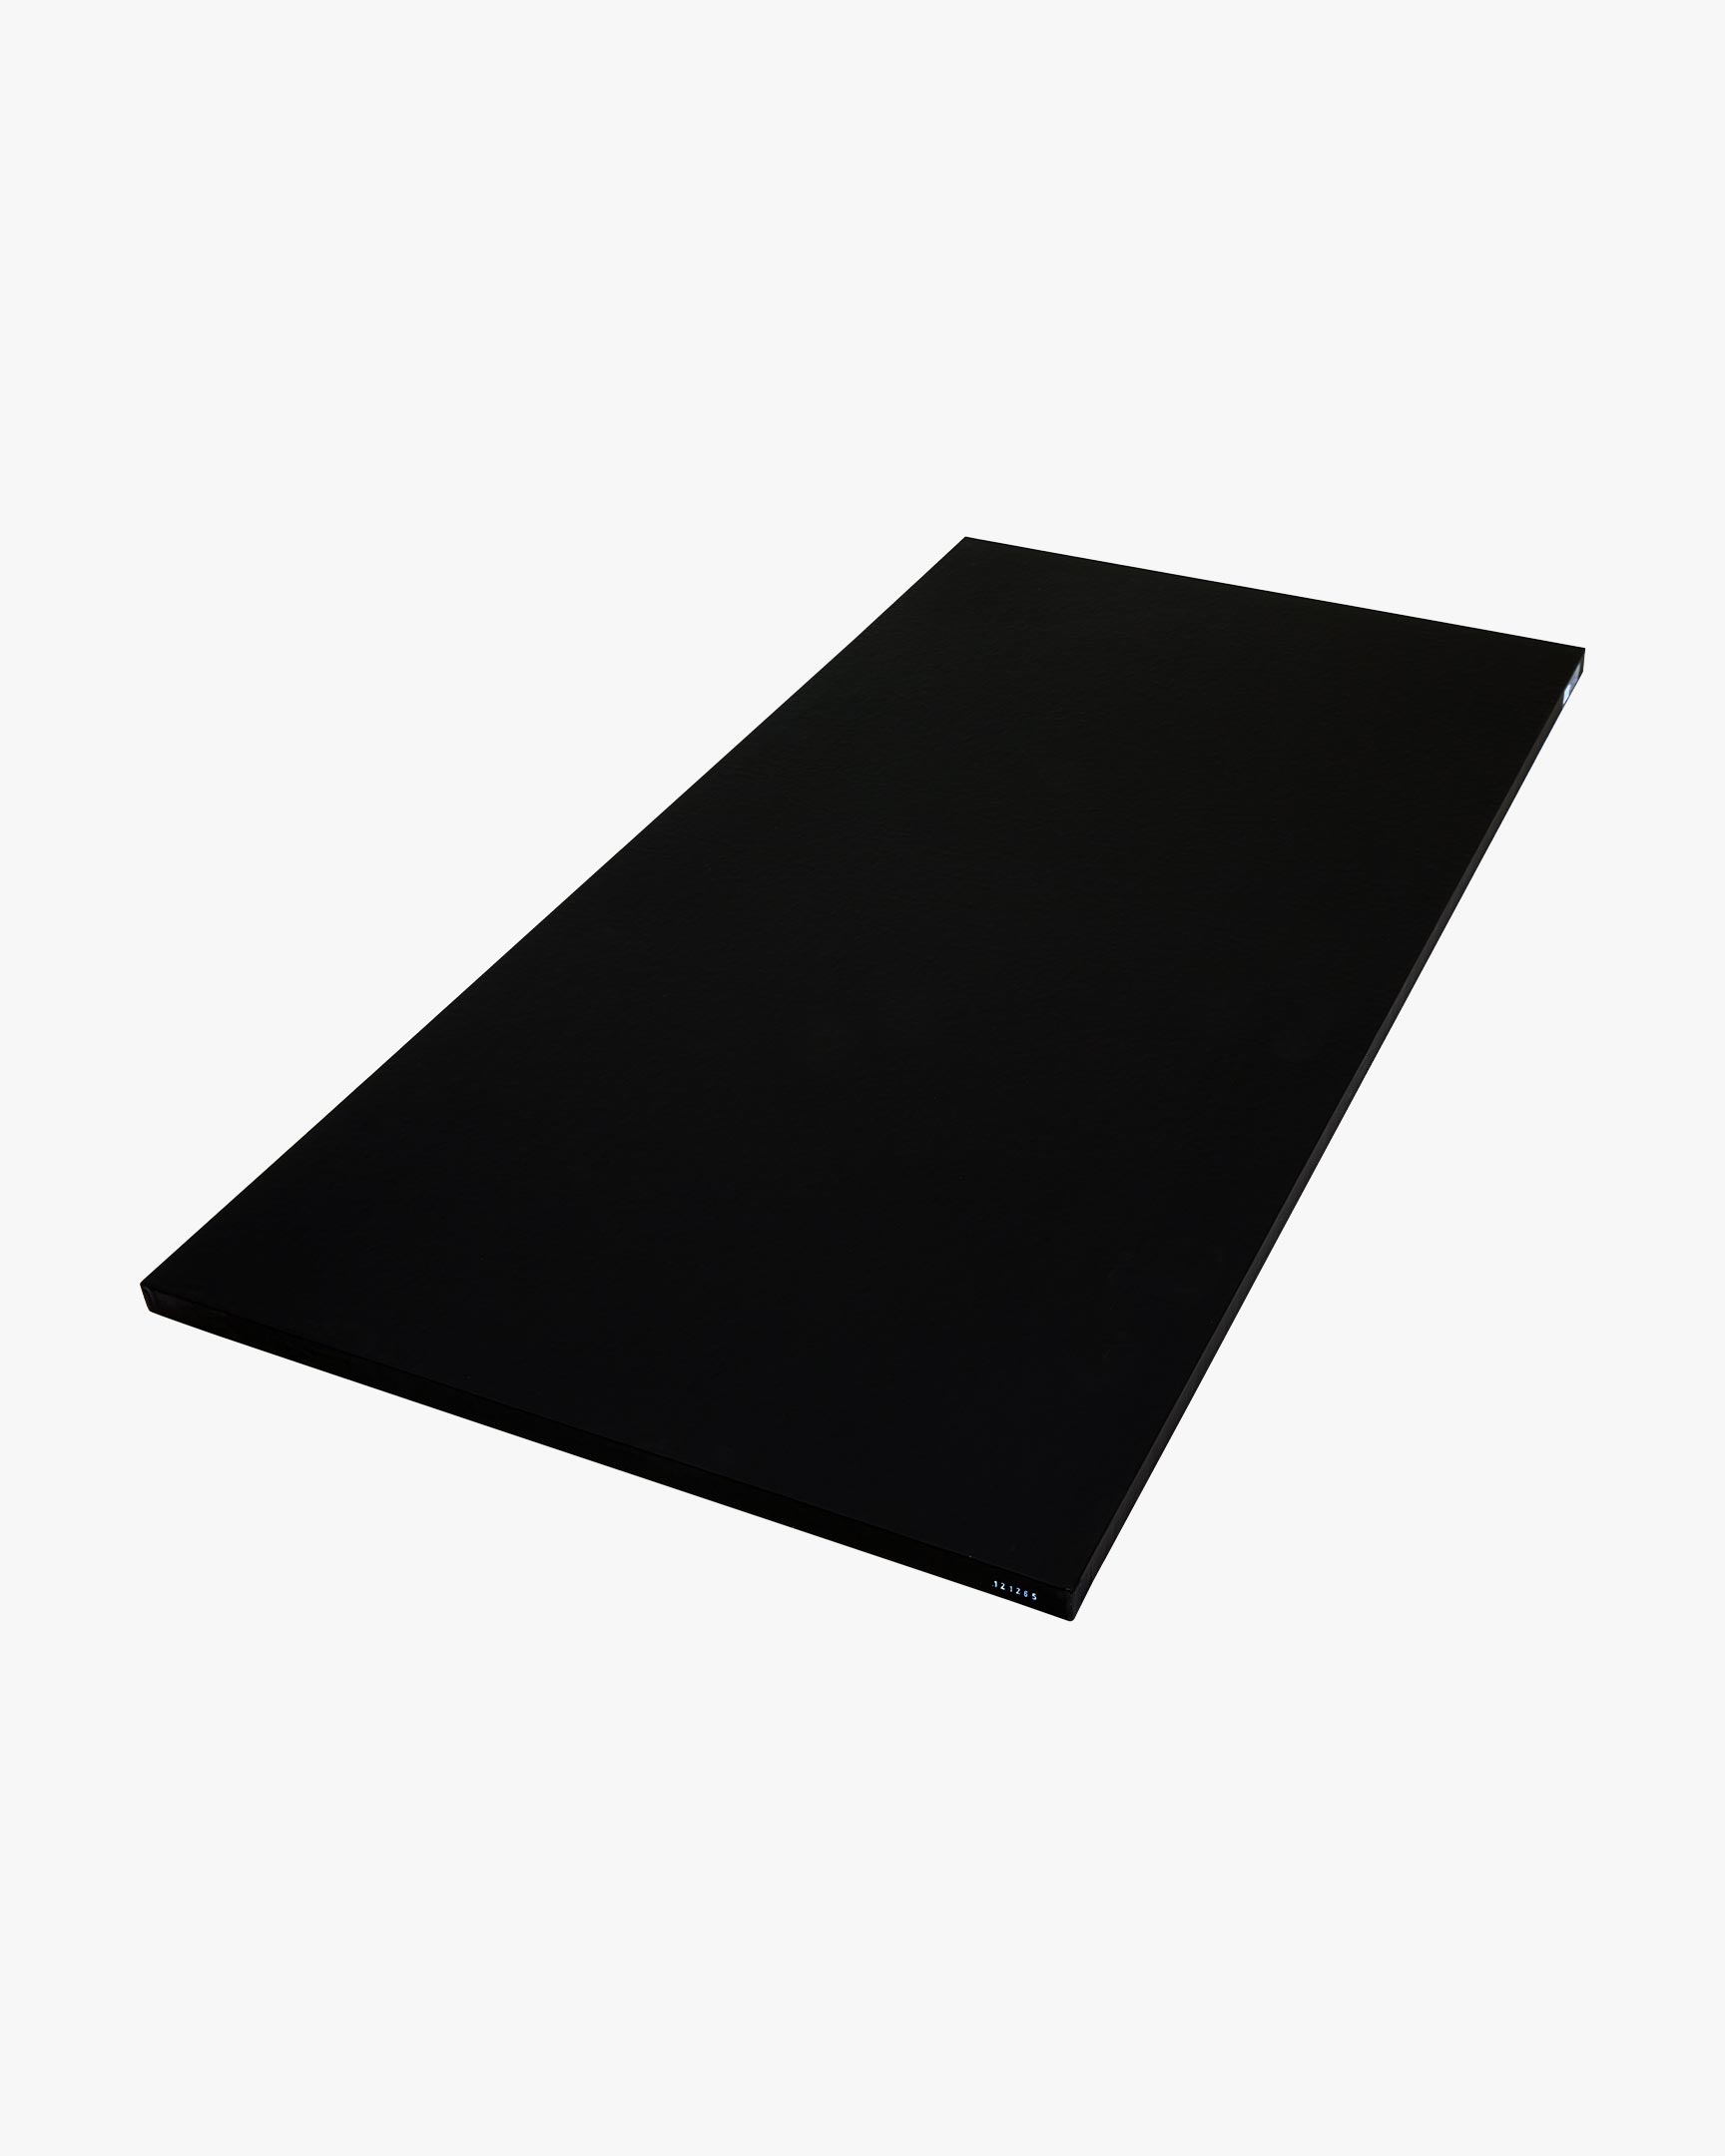 Smooth Tile Mat - 1m x 2m 1.5 Inch Black